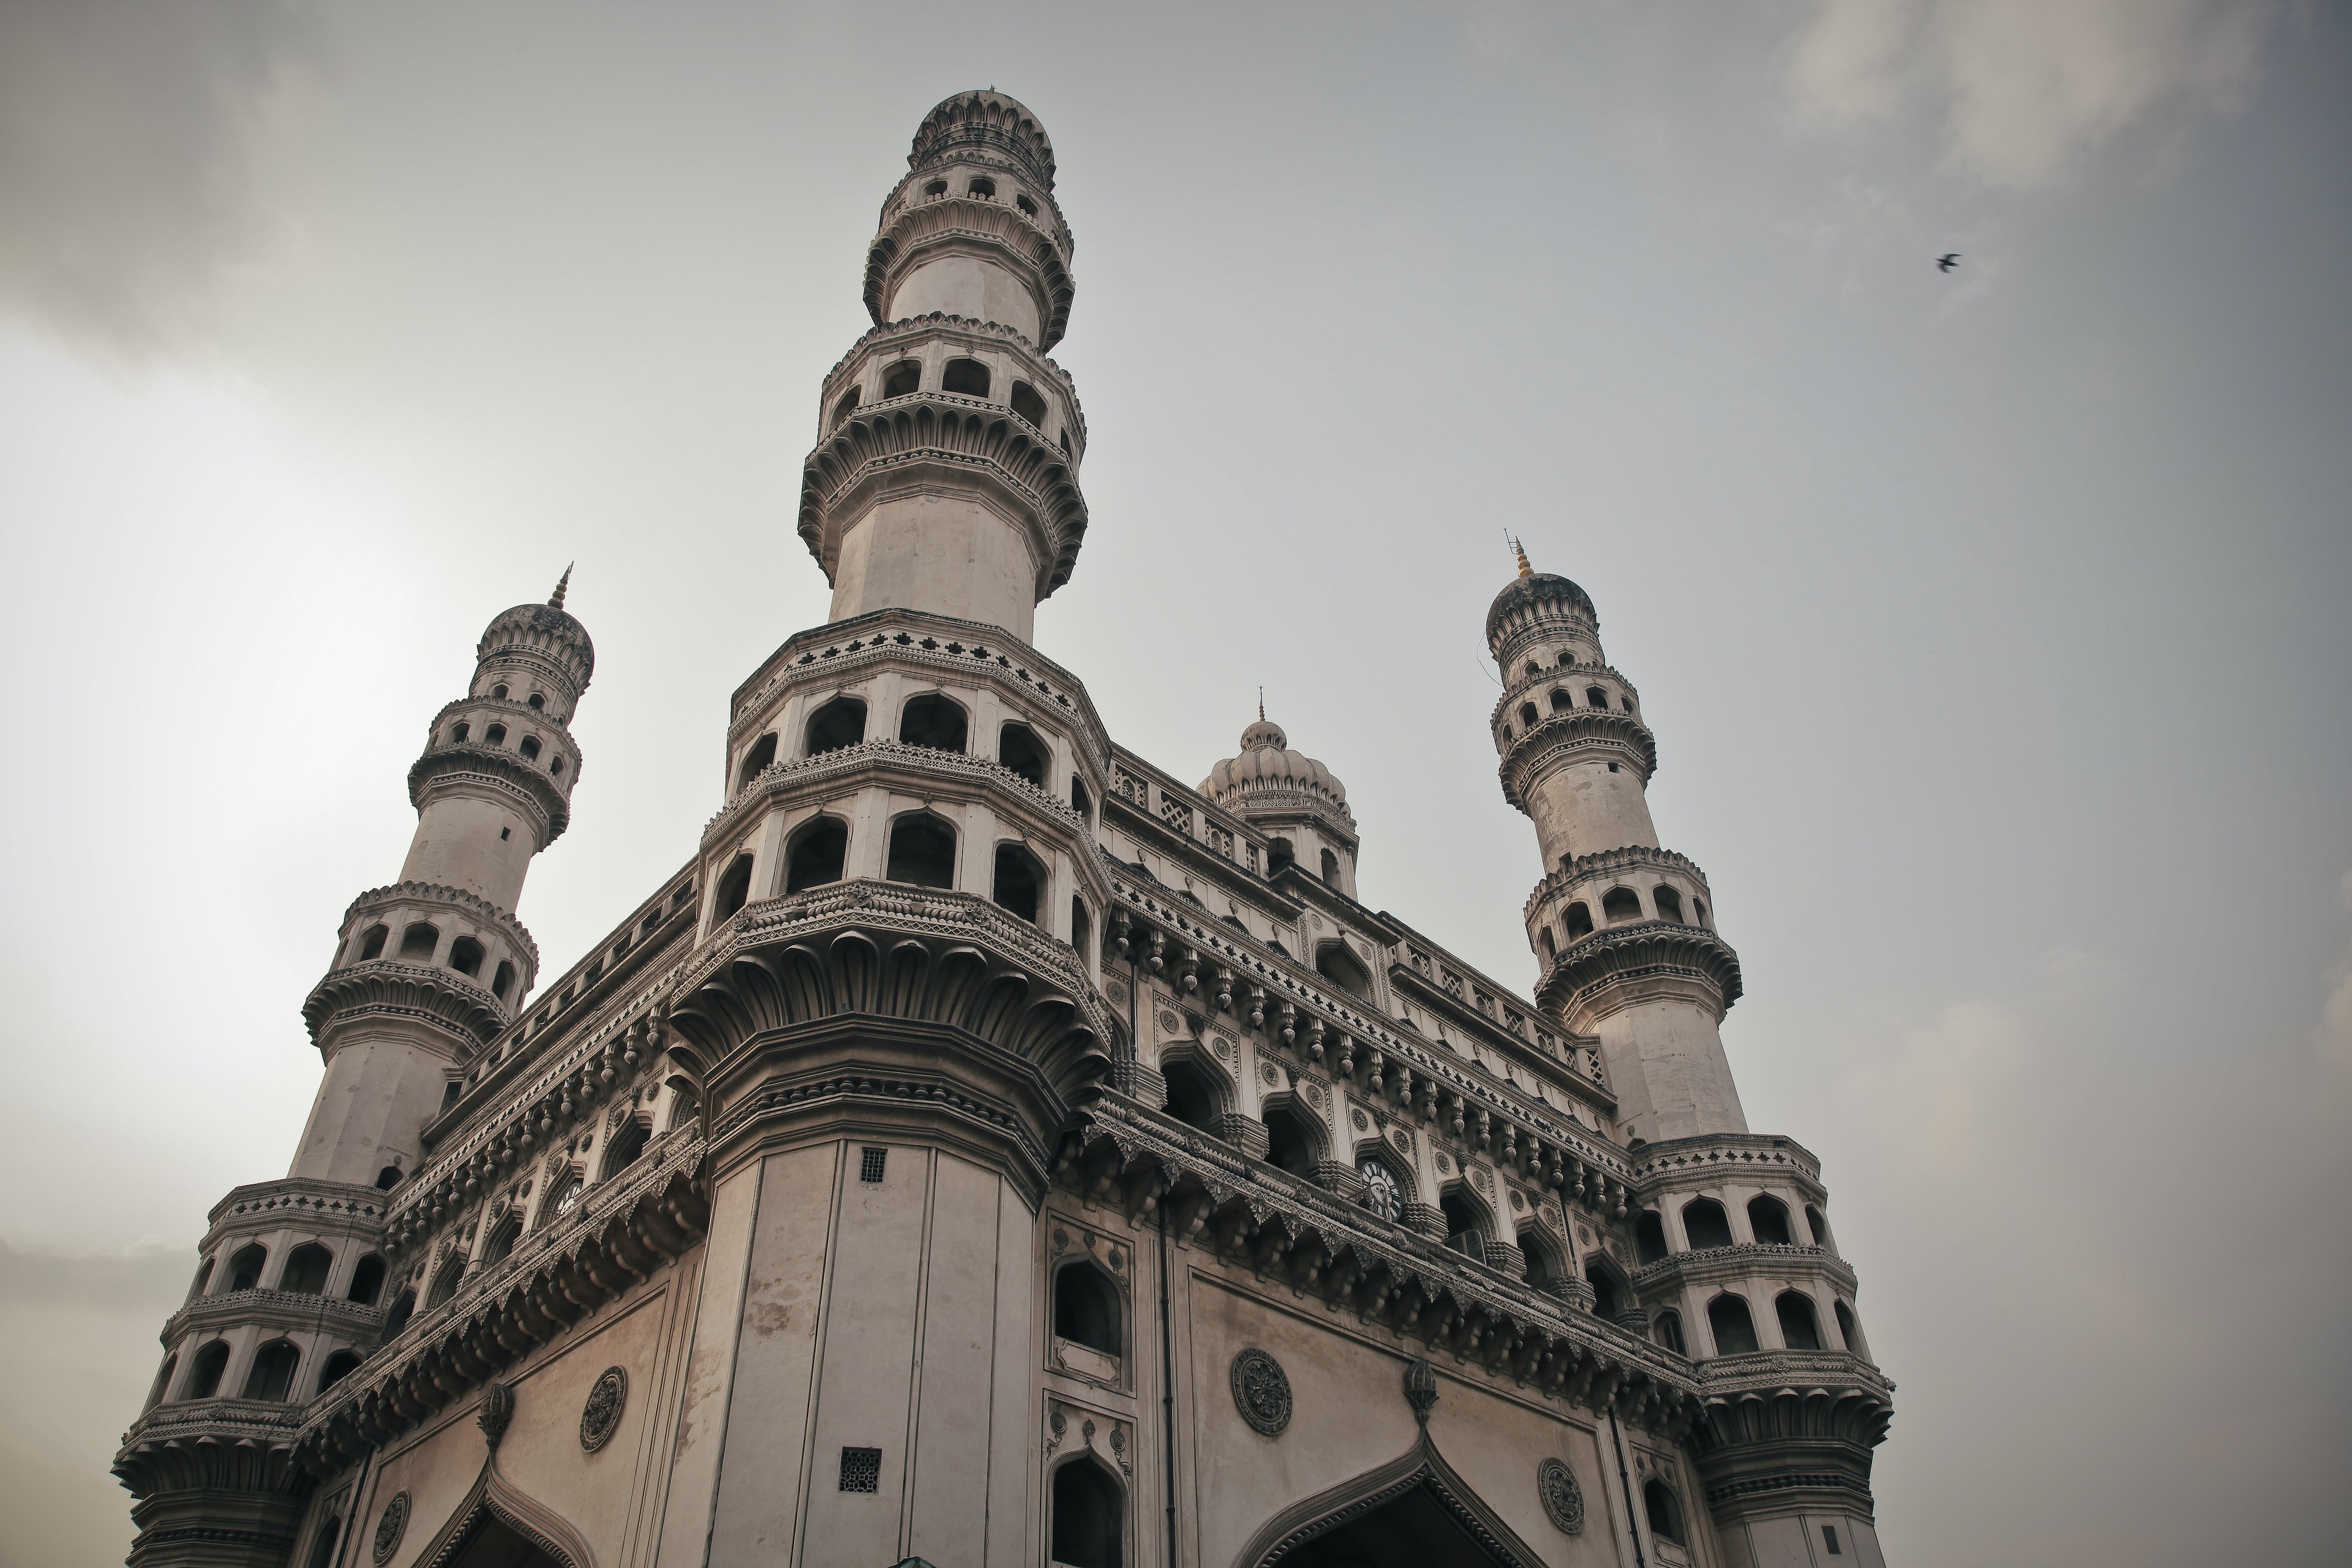 Hyderabad ka Charminar: The Arc de Triomphe of the East